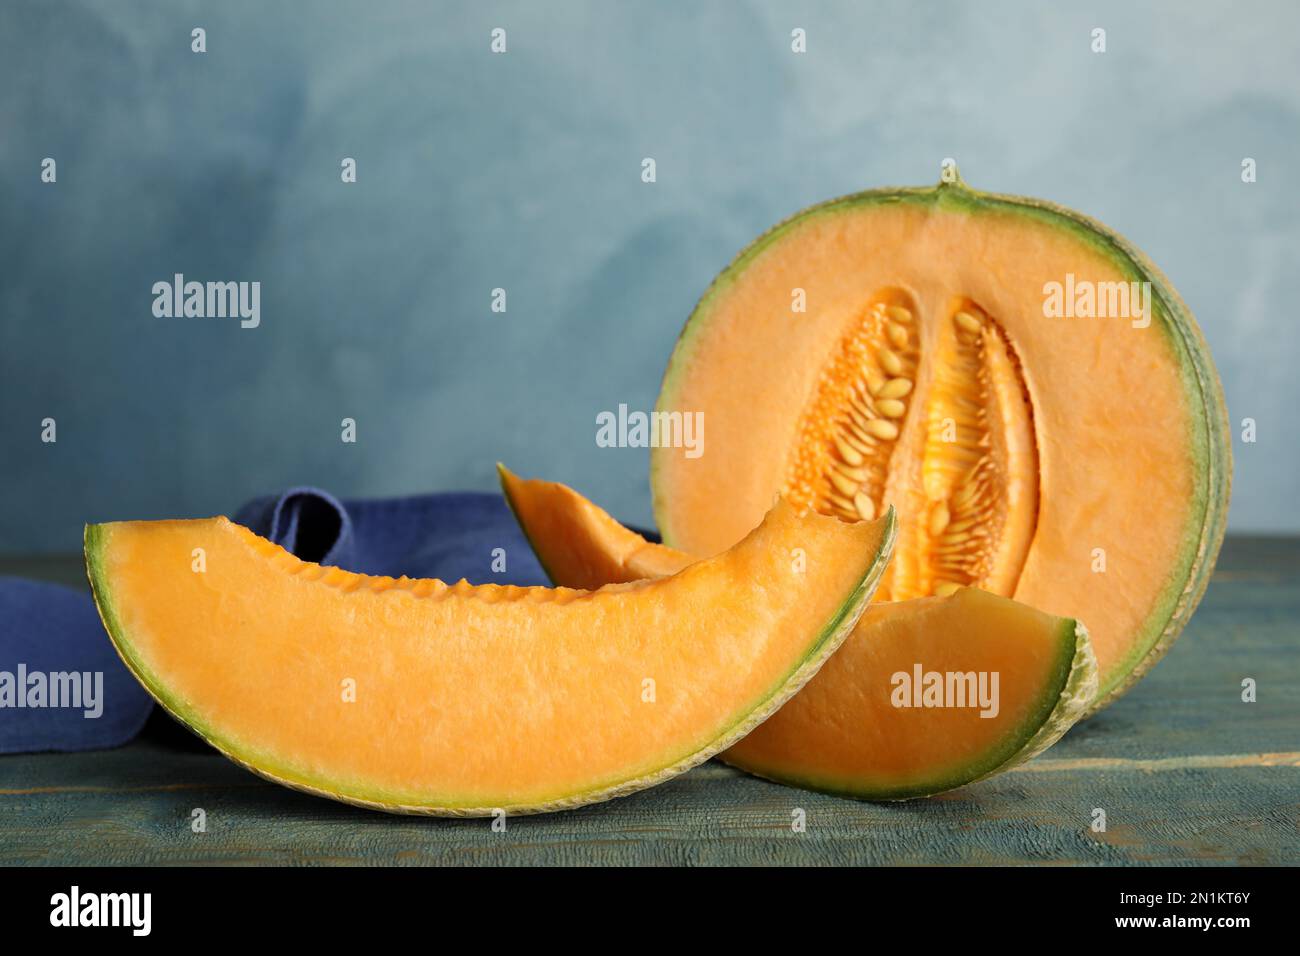 Honey Dew Green Flesh Melon, Cantaloupe Seeds: R.H. Shumway's Company